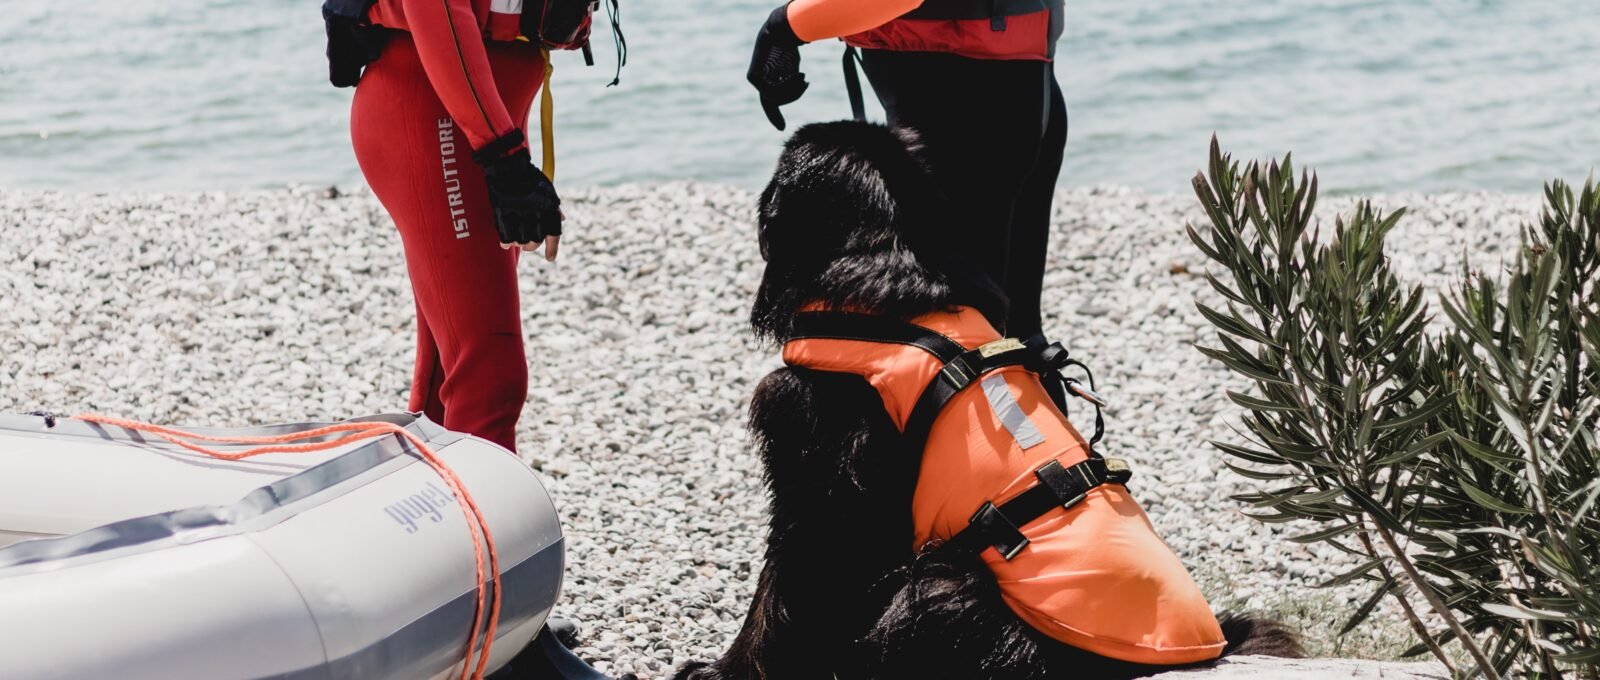 Lifeguard dog on Beach in Italy